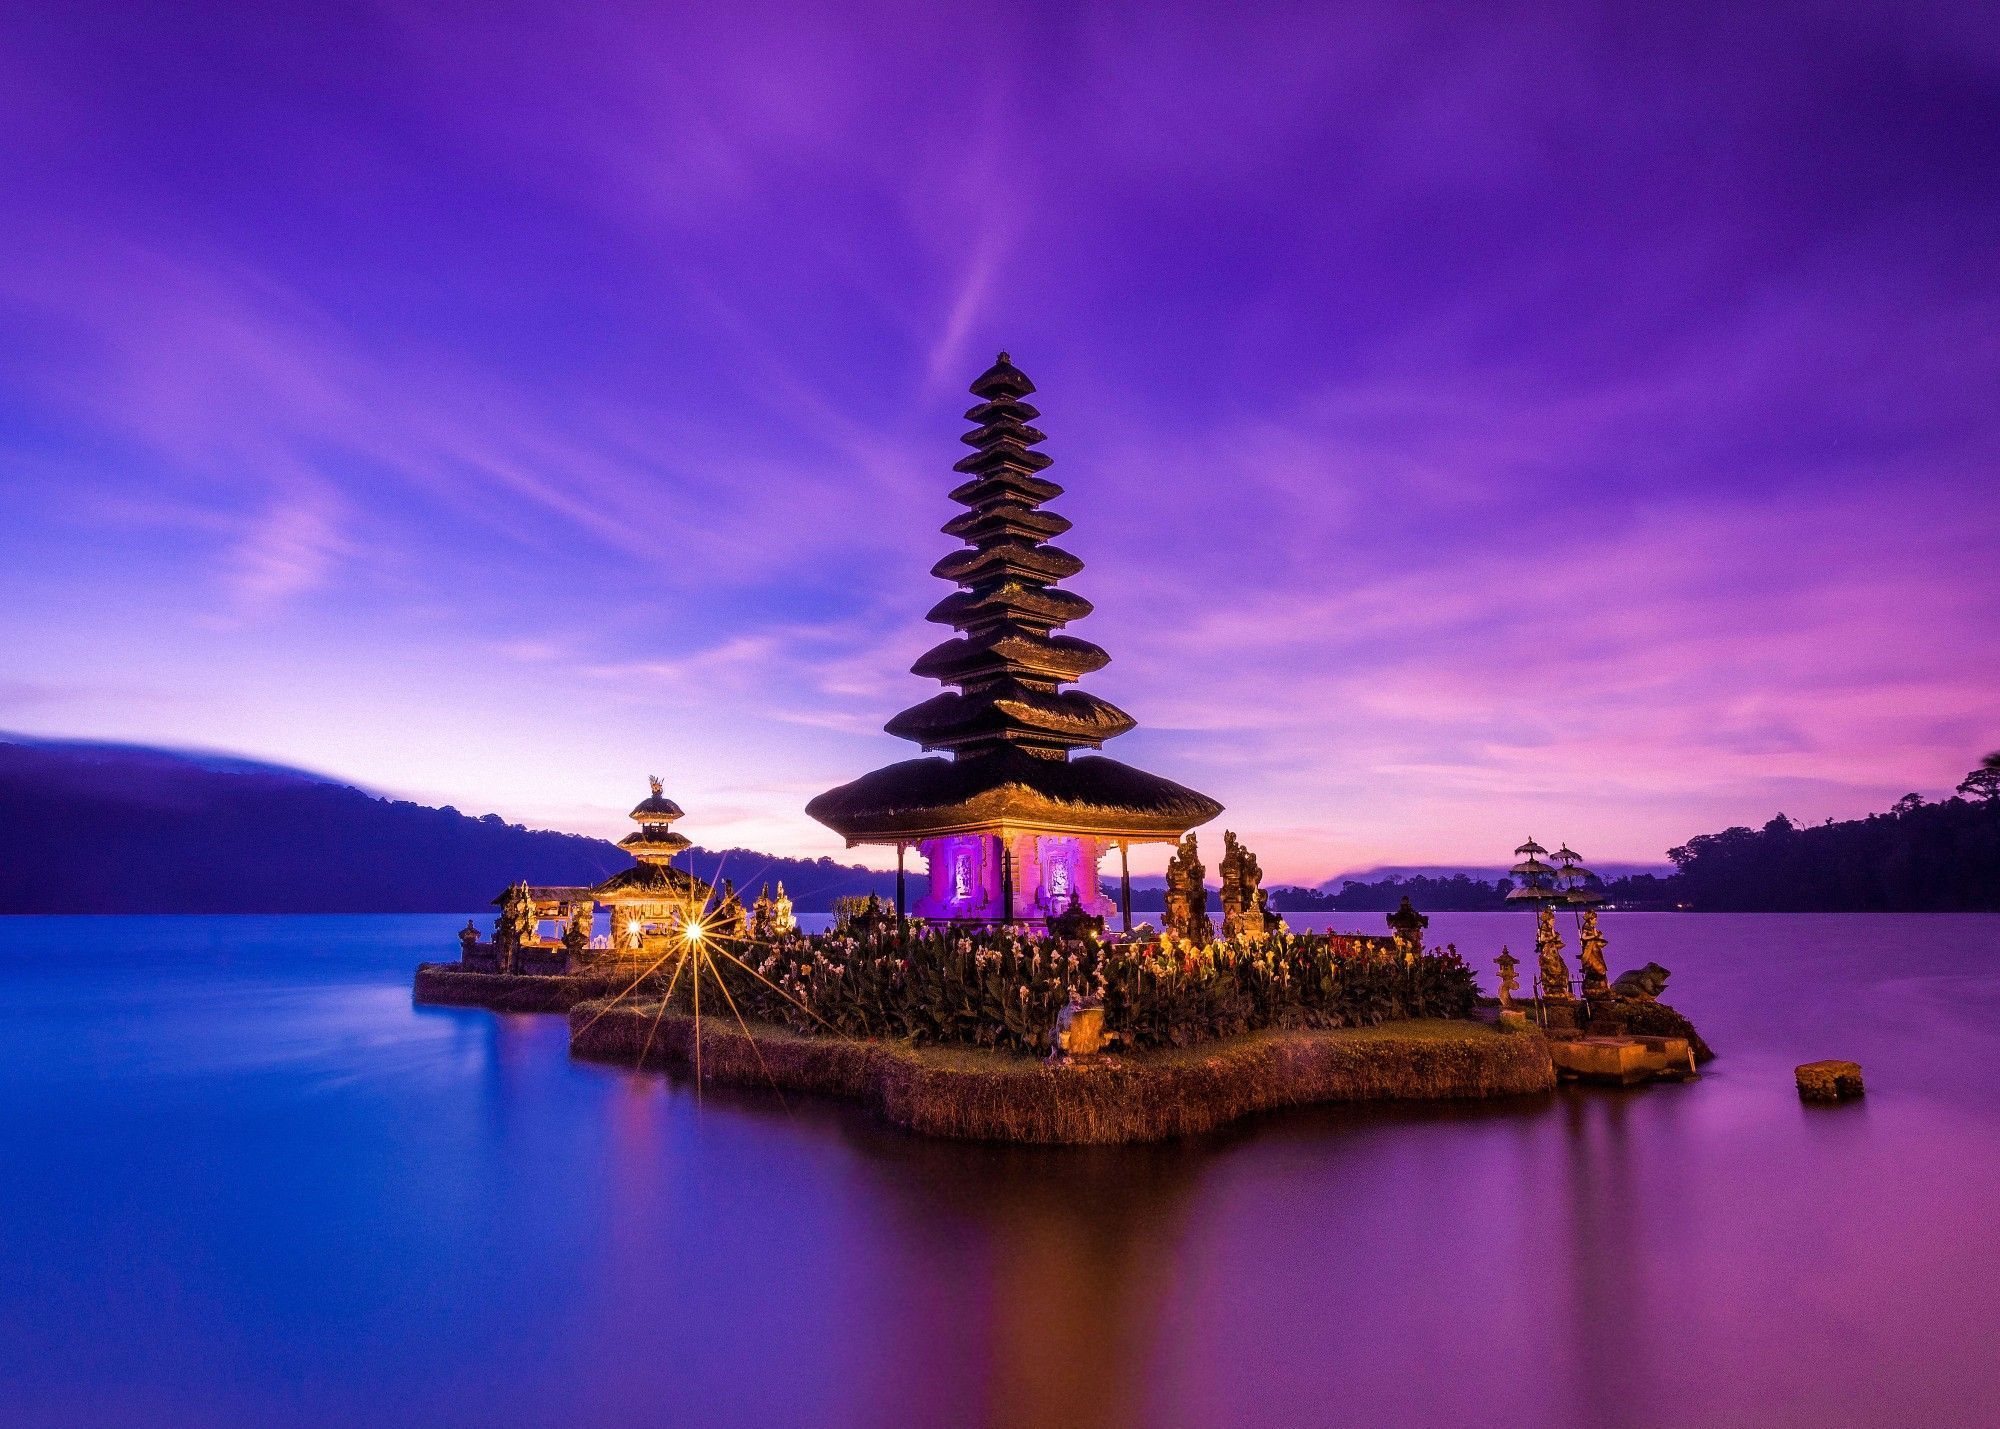  Bali Hintergrundbild 2000x1429. This is so beautyful. Bali, Kuta bali, Bali island